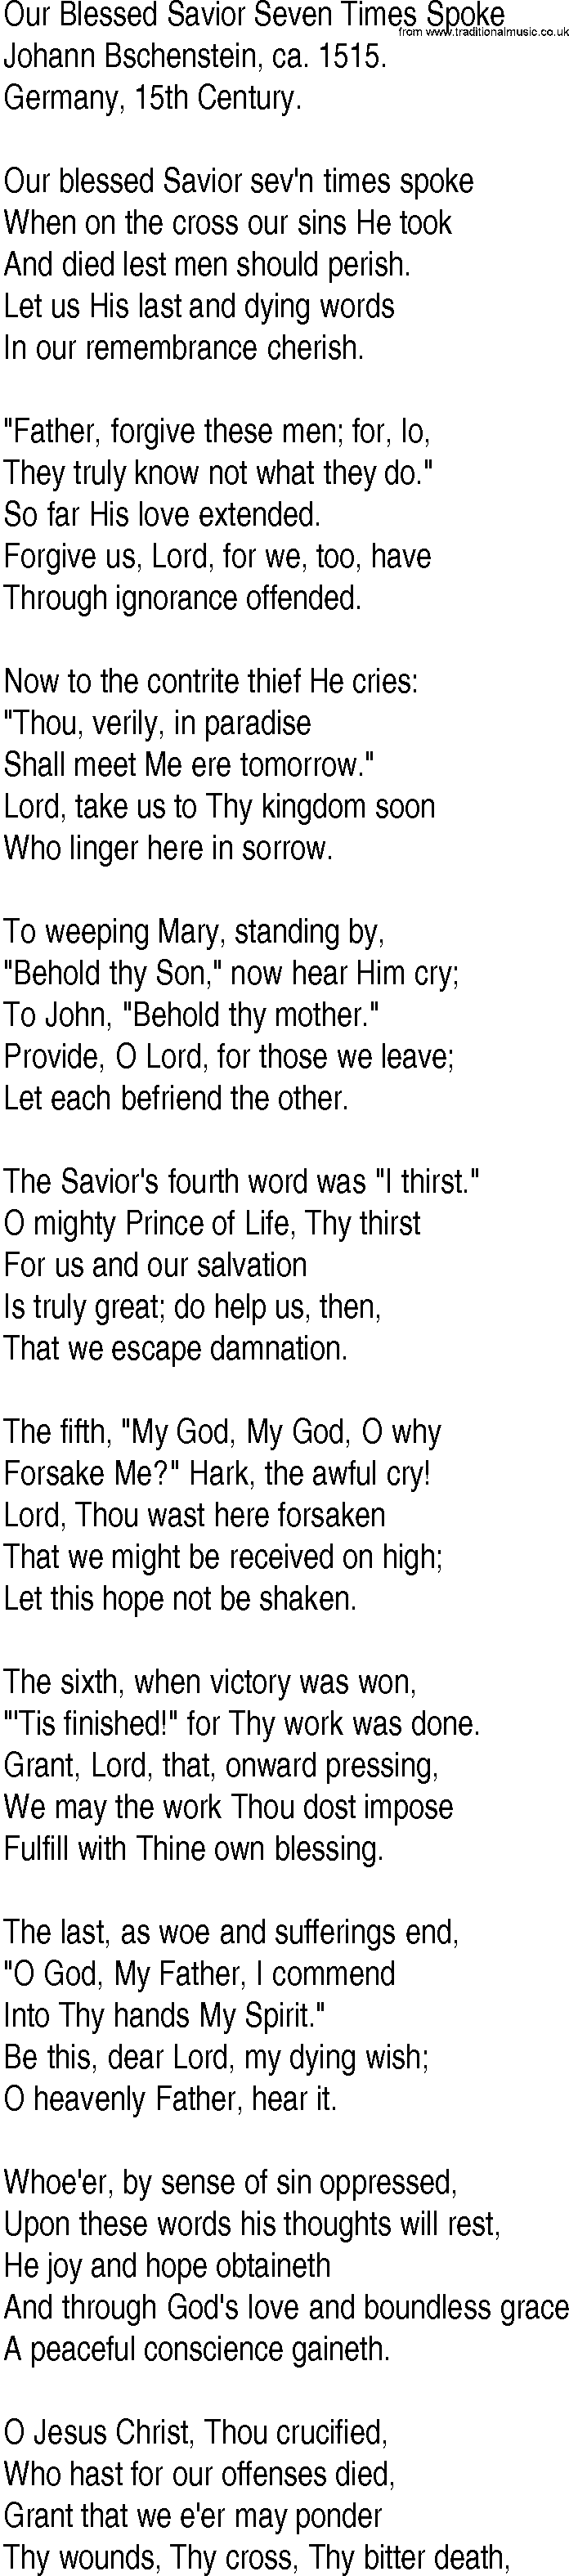 Hymn and Gospel Song: Our Blessed Savior Seven Times Spoke by Johann Beschenstein ca lyrics